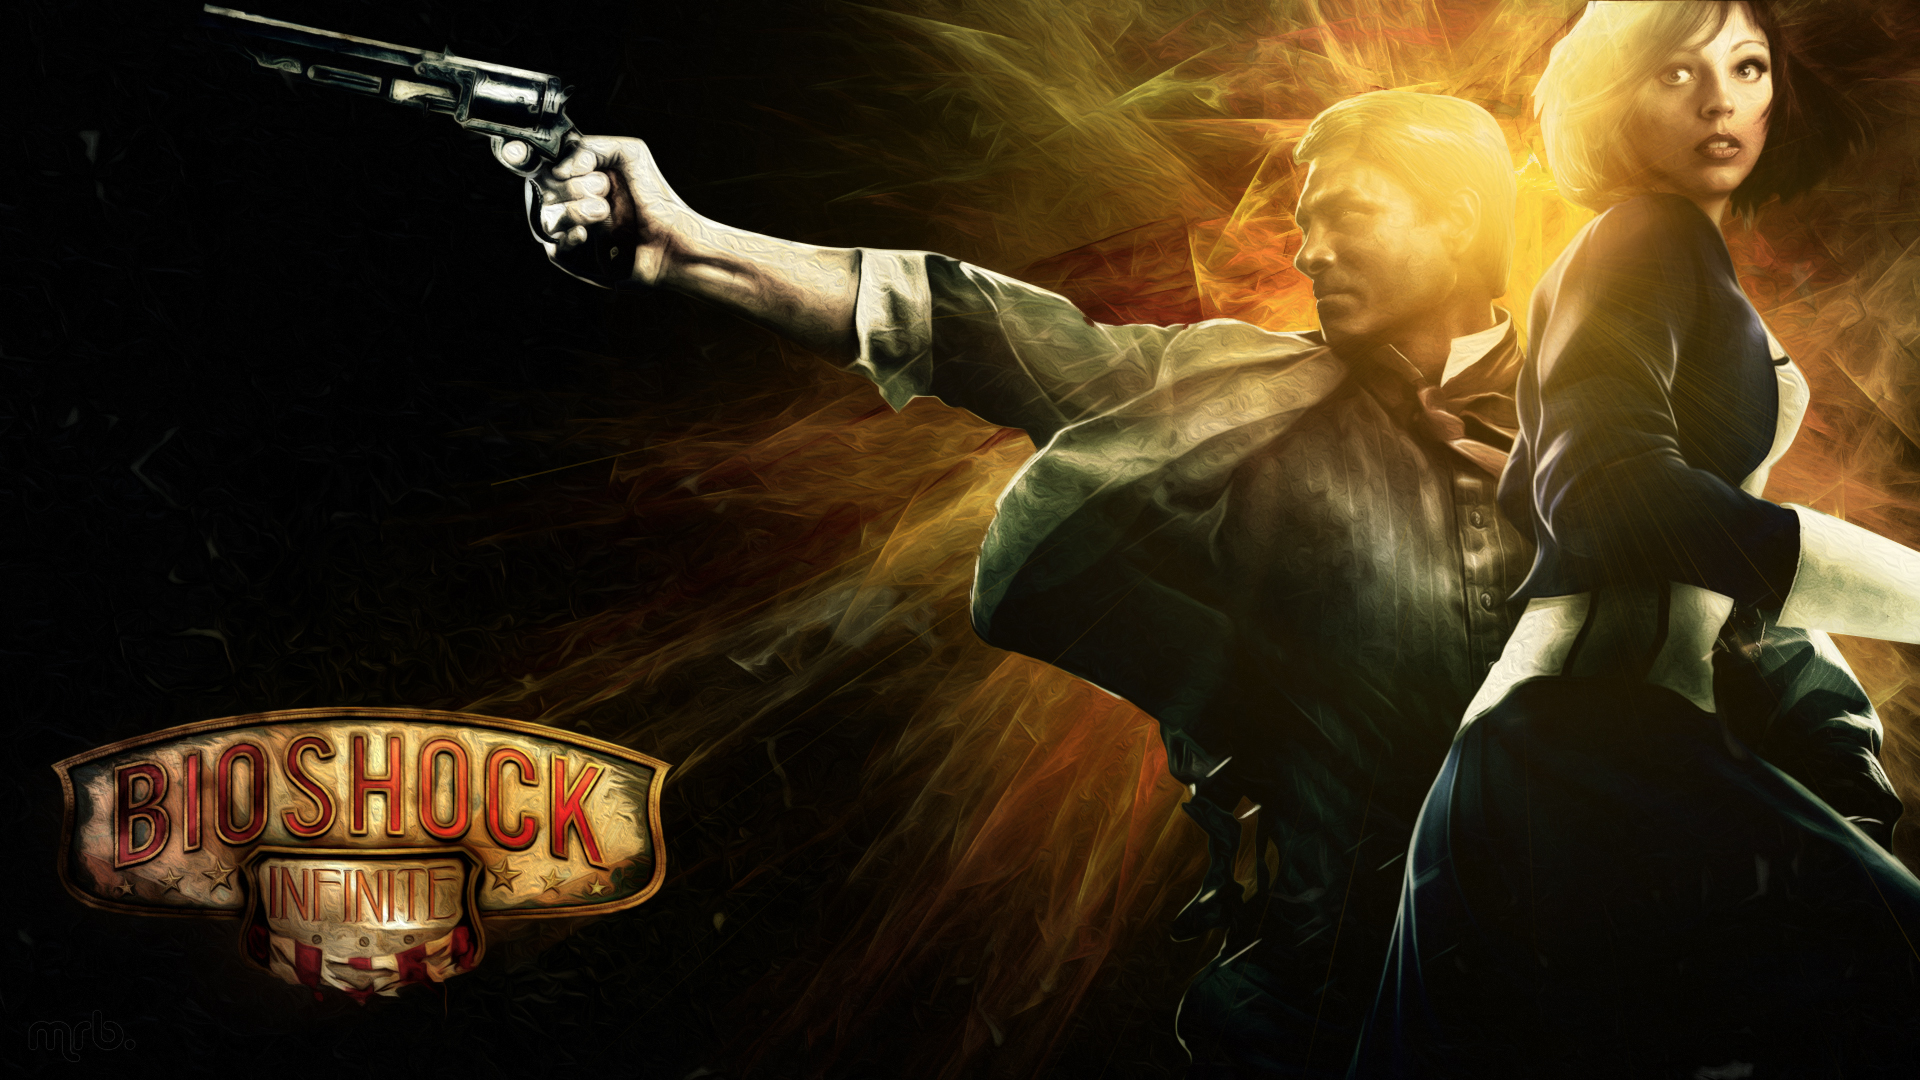 Bioshock Infinite Wallpaper 1080p Imagebank Biz